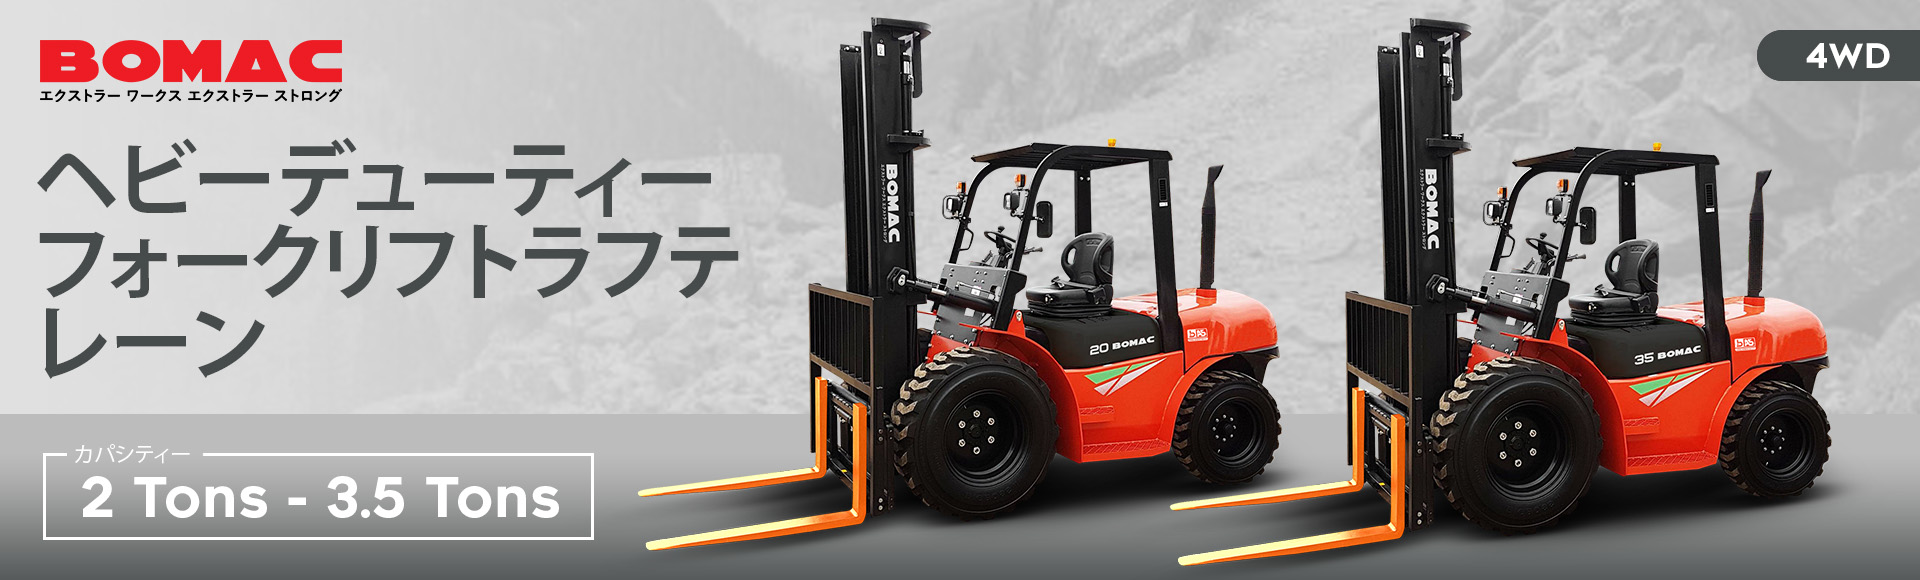 Banner Bomac Forklift Rough Terrain 2 TON - 3.5 TON Japan Ver 4WD